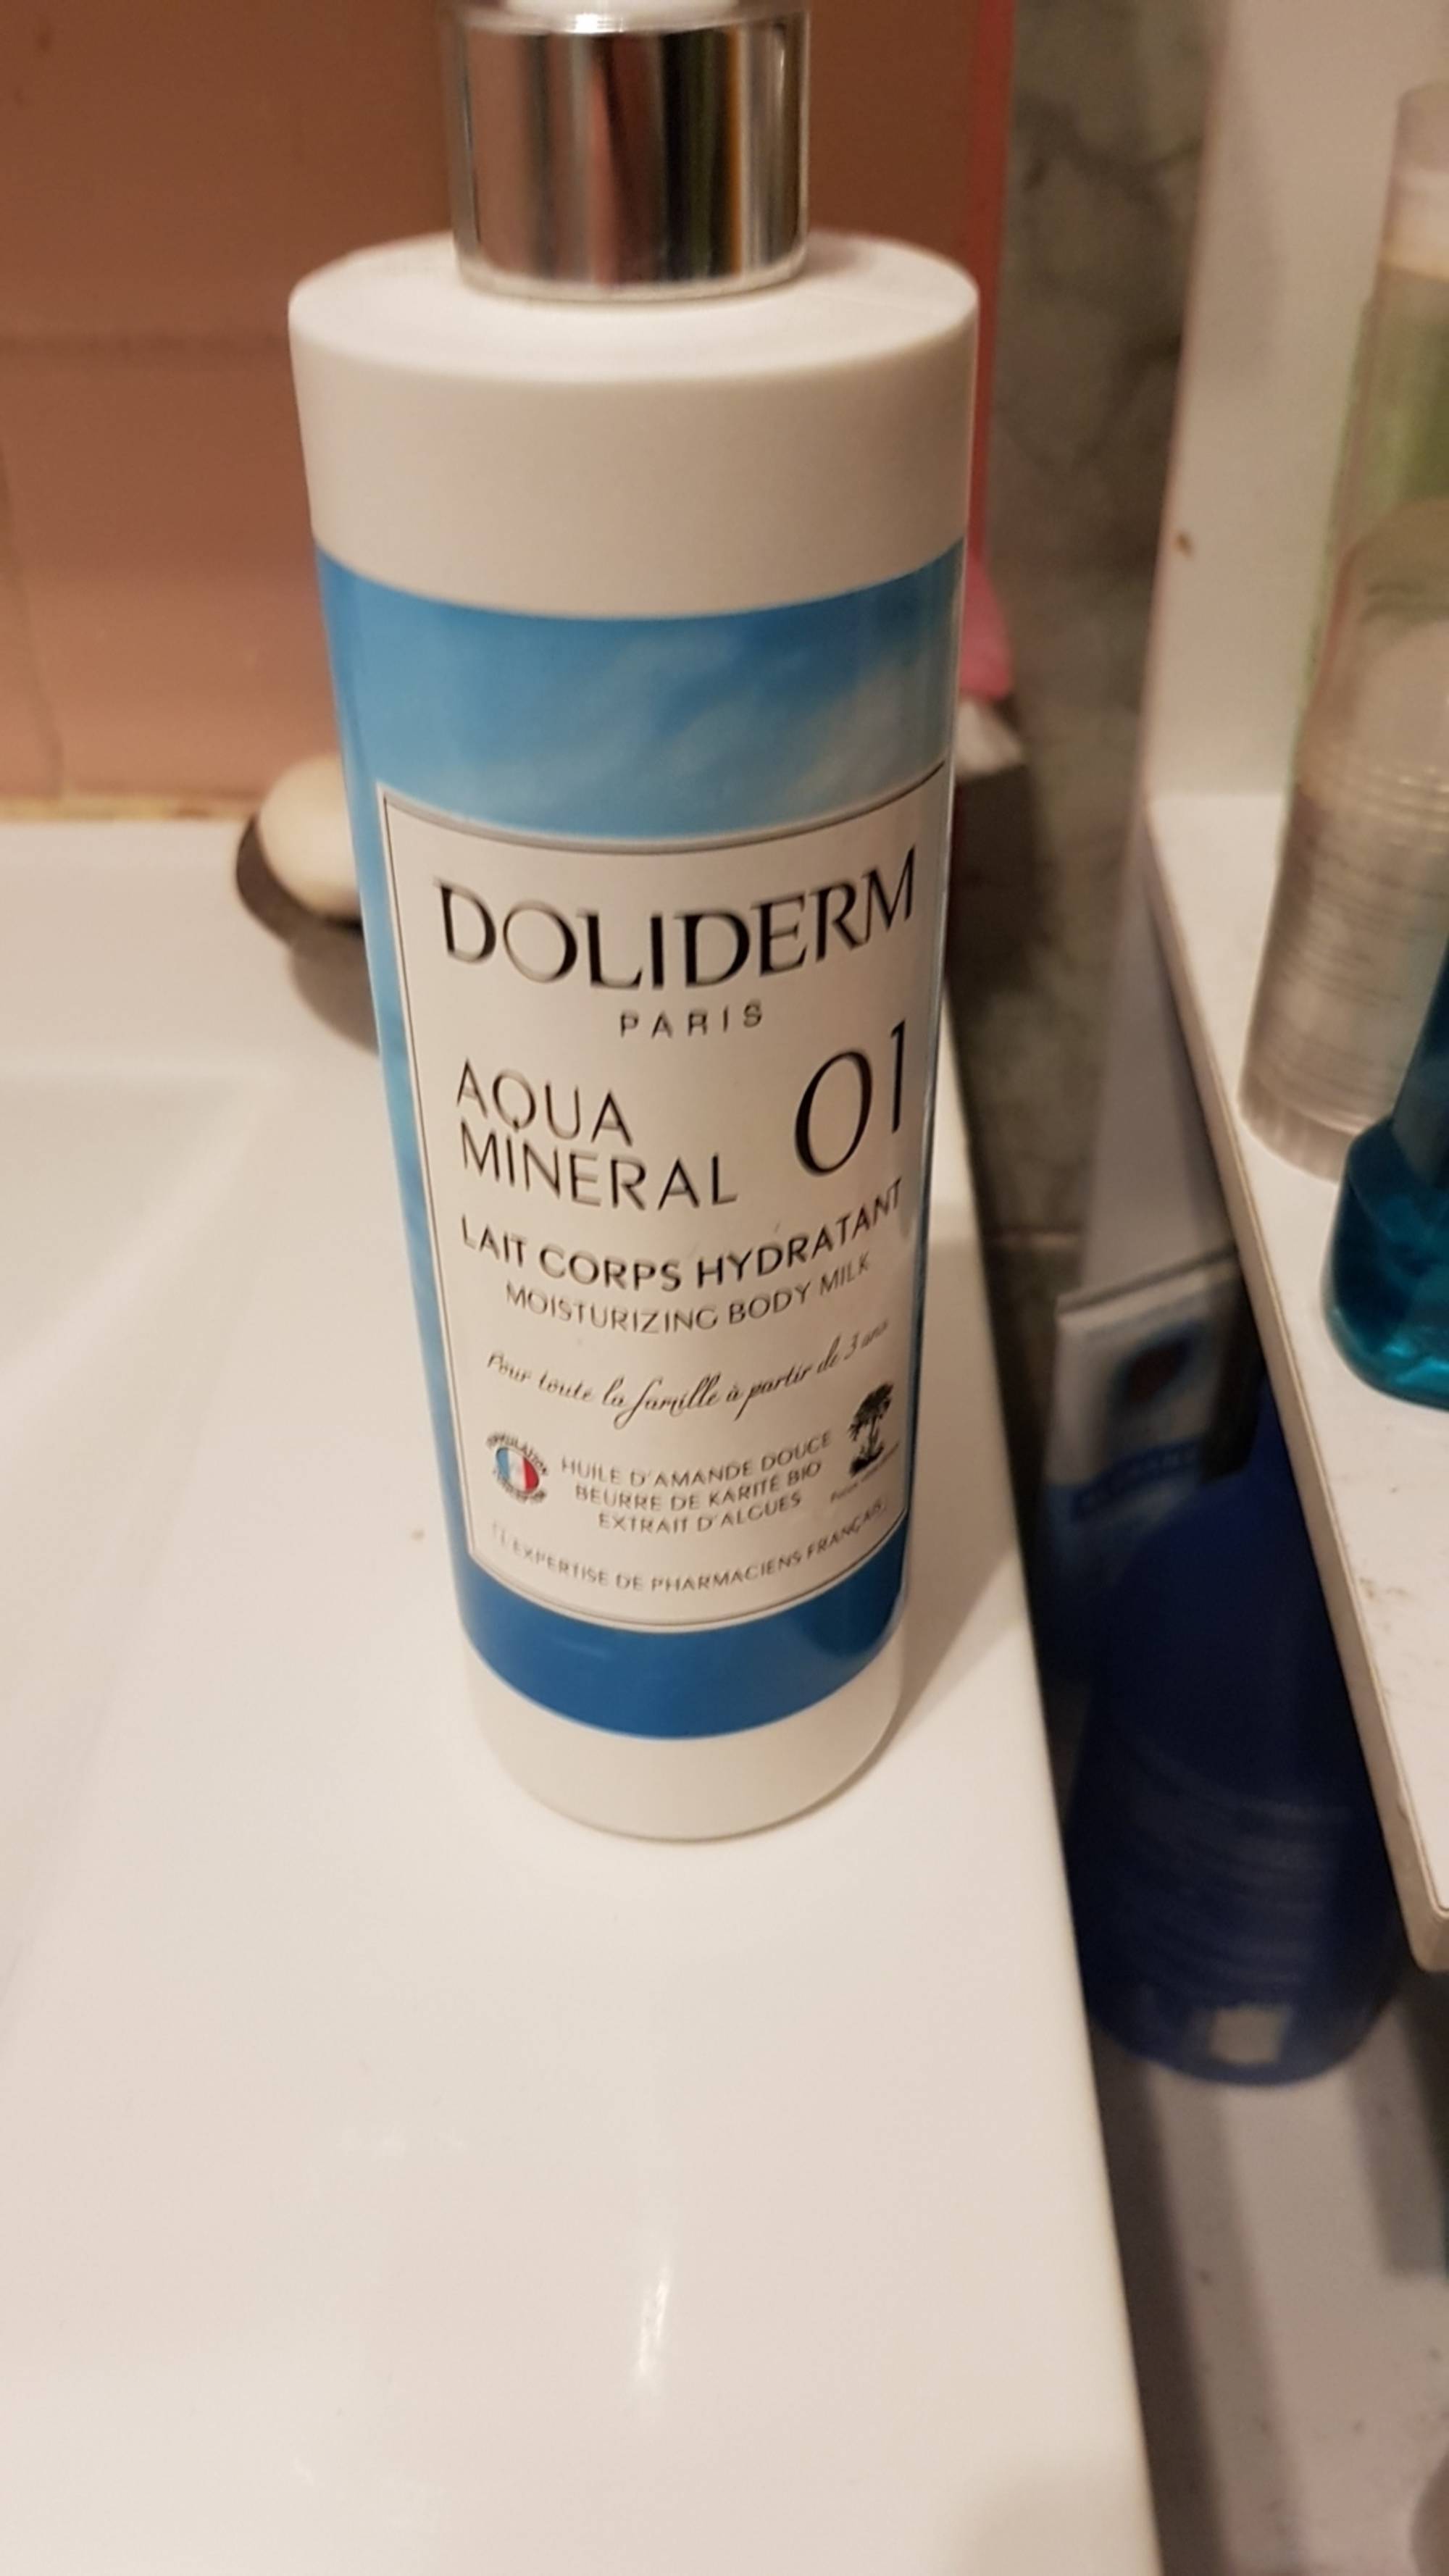 DOLIDERM - Aqua mineral 01 - Lait corps hydratant